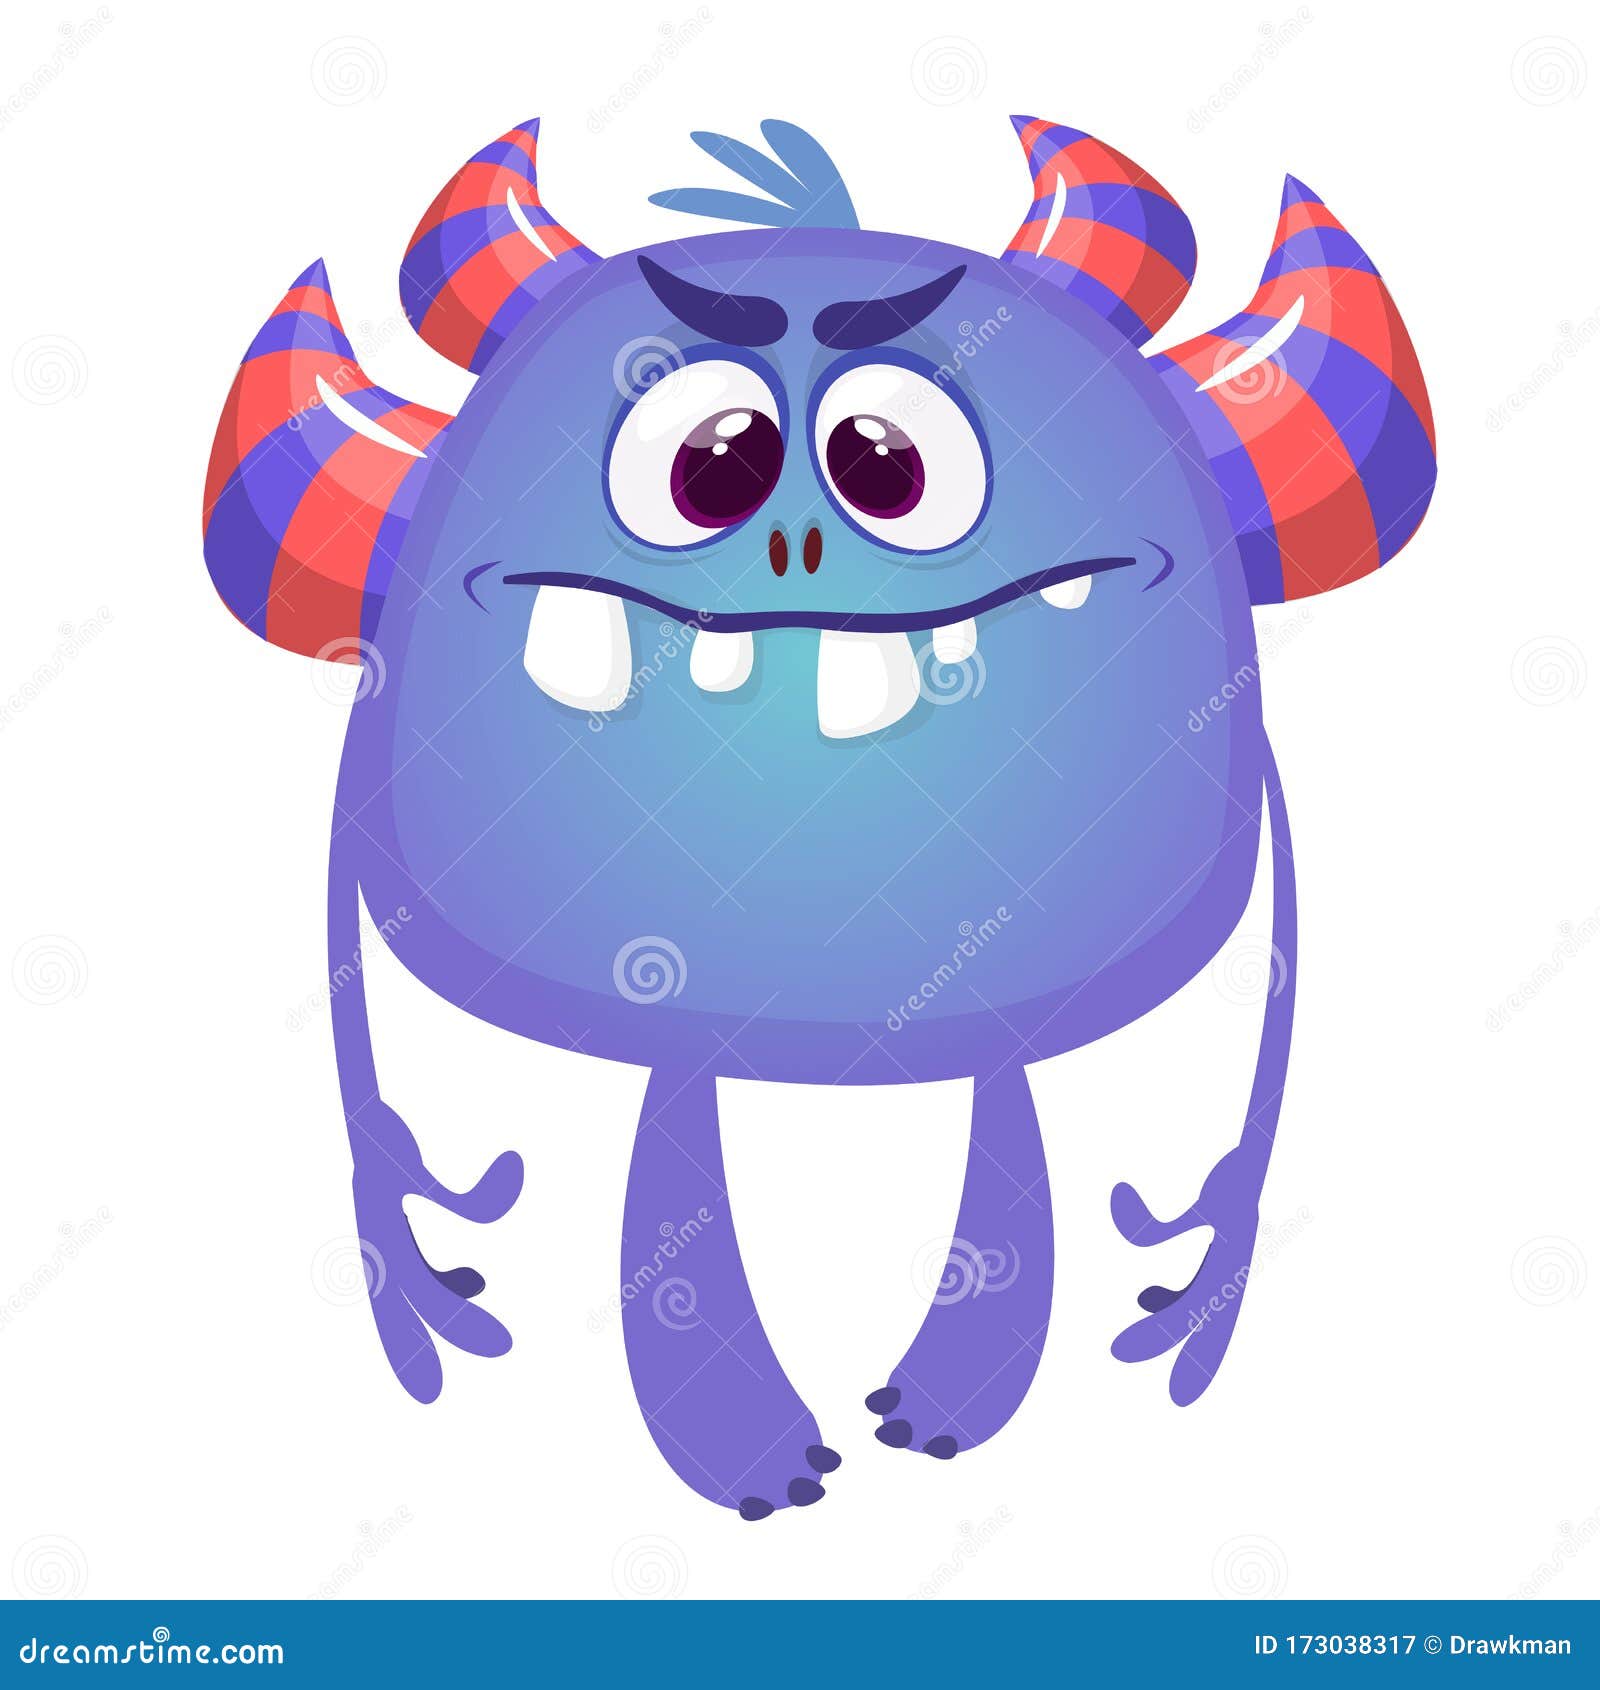 Scary Little Cartoon Monster. Vector Illustration of Cute Monster Character  Design Stock Vector - Illustration of monster, design: 173038317